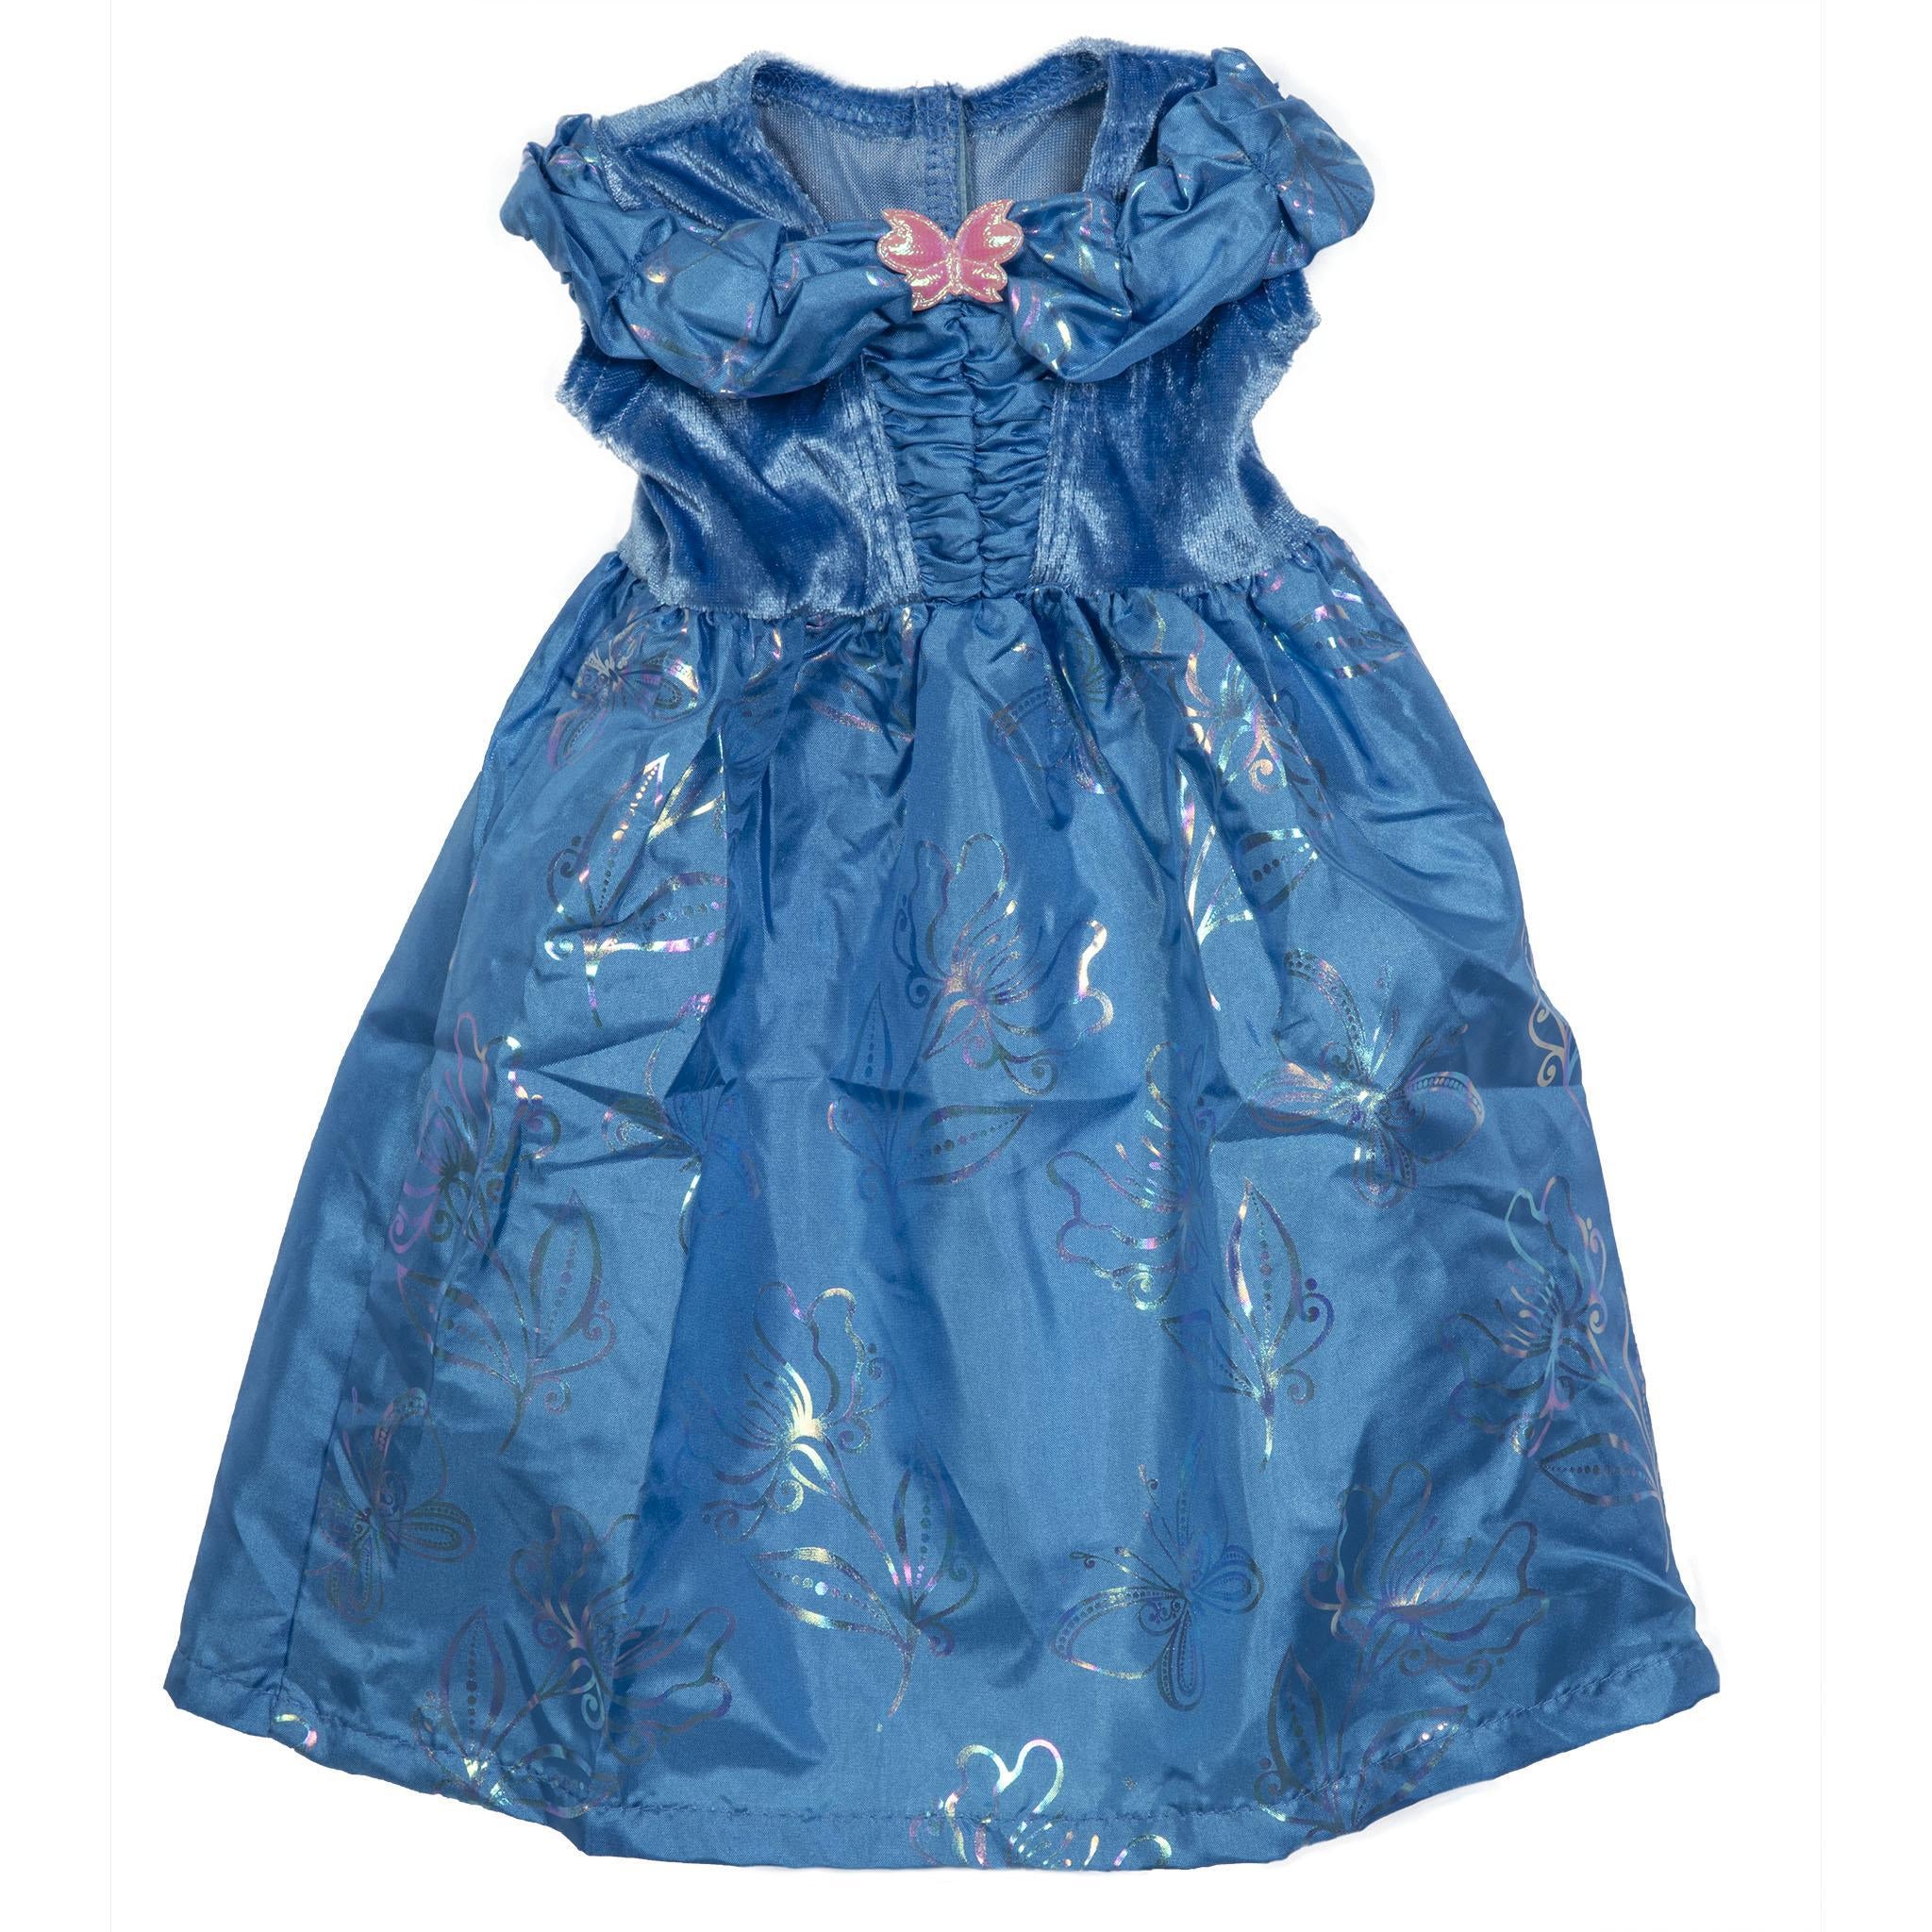 Lil Doll Dress Cinderella Butterfly Fits 16-20"